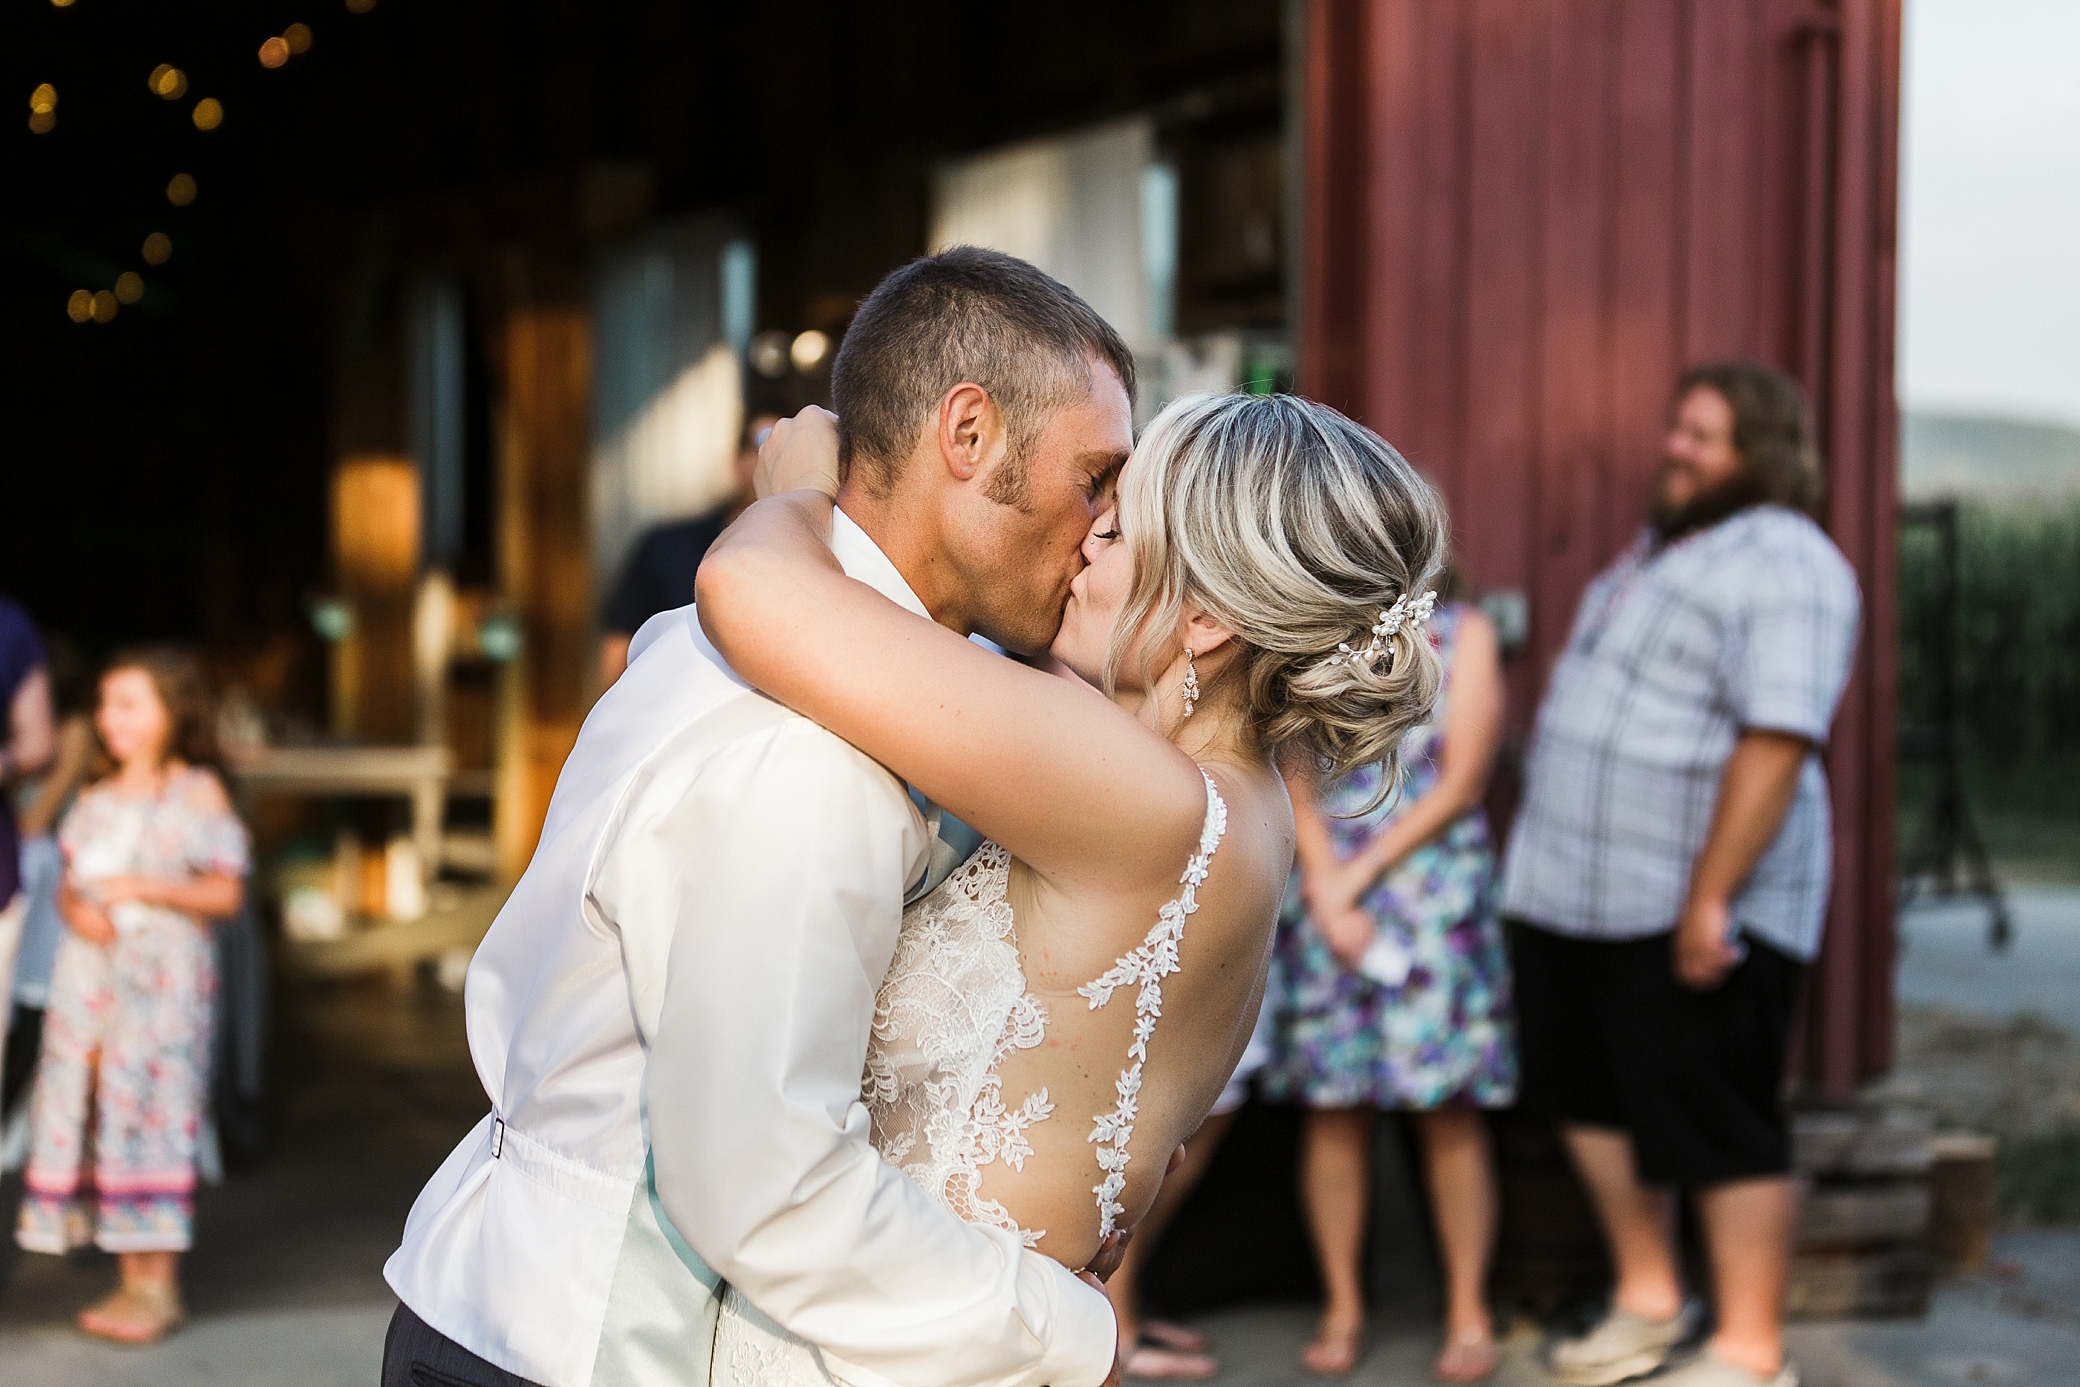 Bride and groom first dance at Maplehurst Farm Wedding Venue in Mount Vernon, WA | Megan Montalvo Photography 